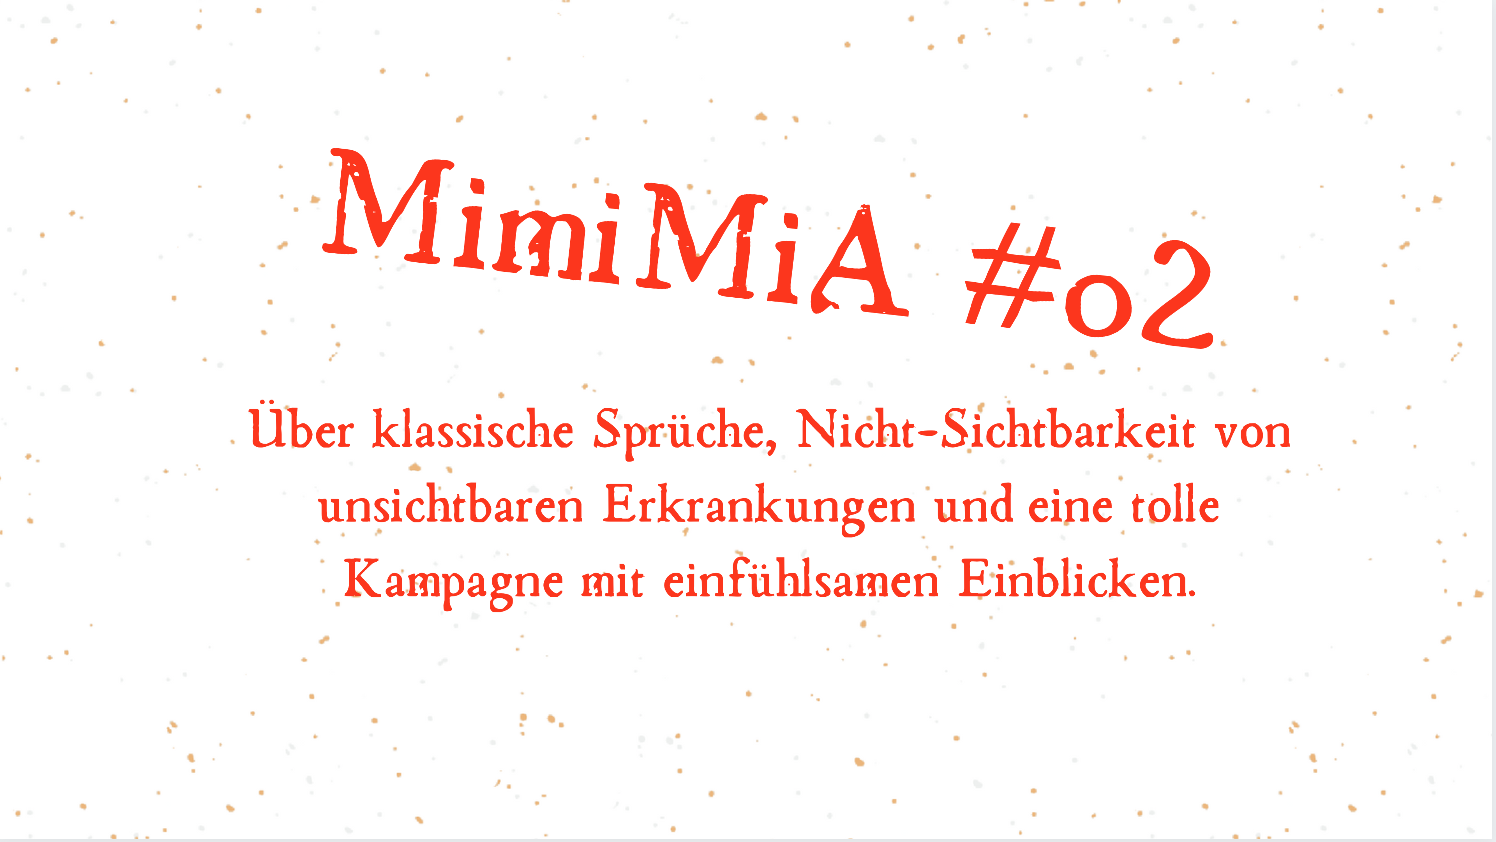 MimiMiA02 makeitvisible - MimiMiA #02: Spruchklassiker, Unsichtbares und #Makeitvisible